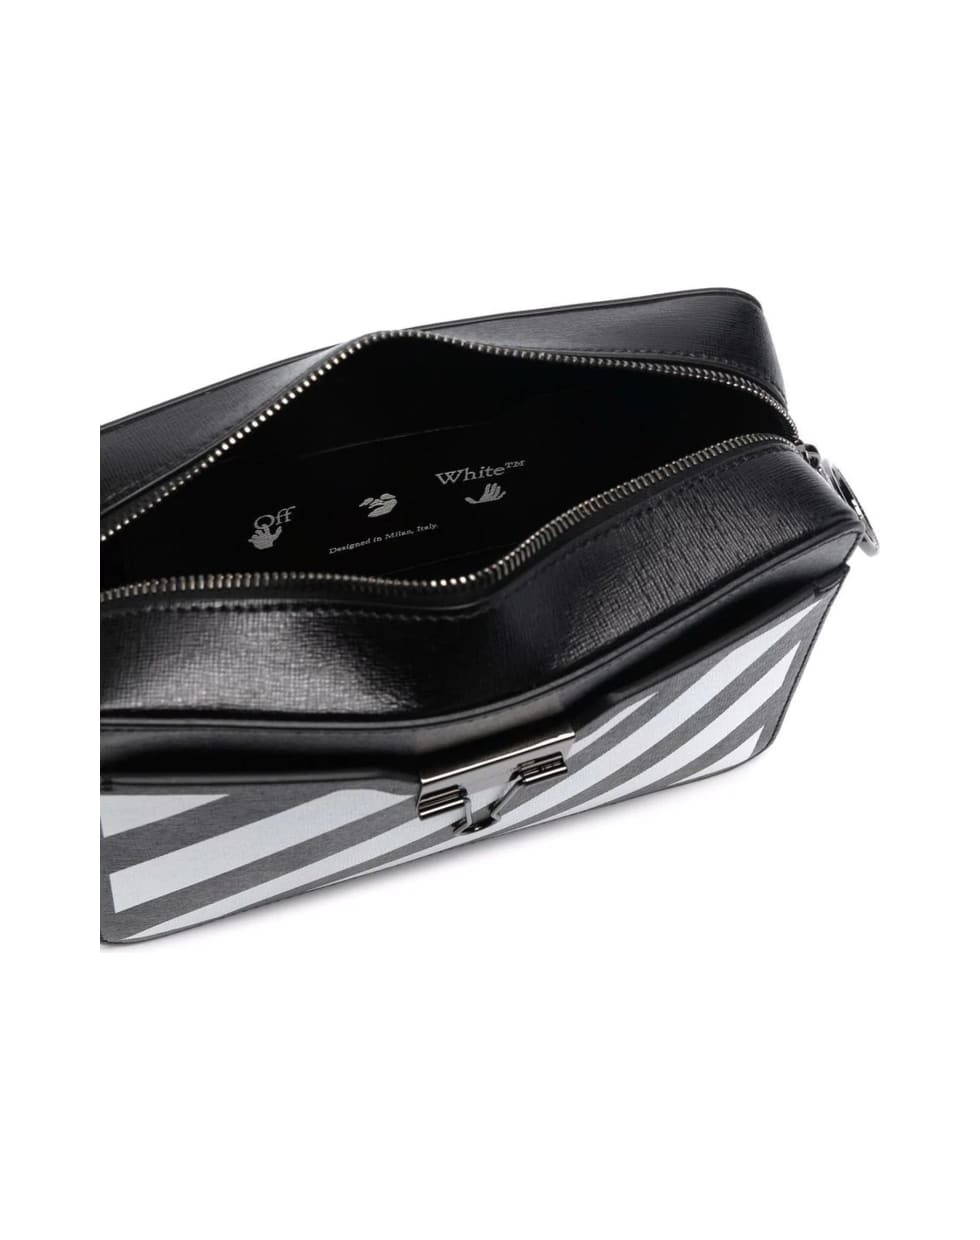 Off-White Black Diag Leather Shoulder Bag - Nero+bianco